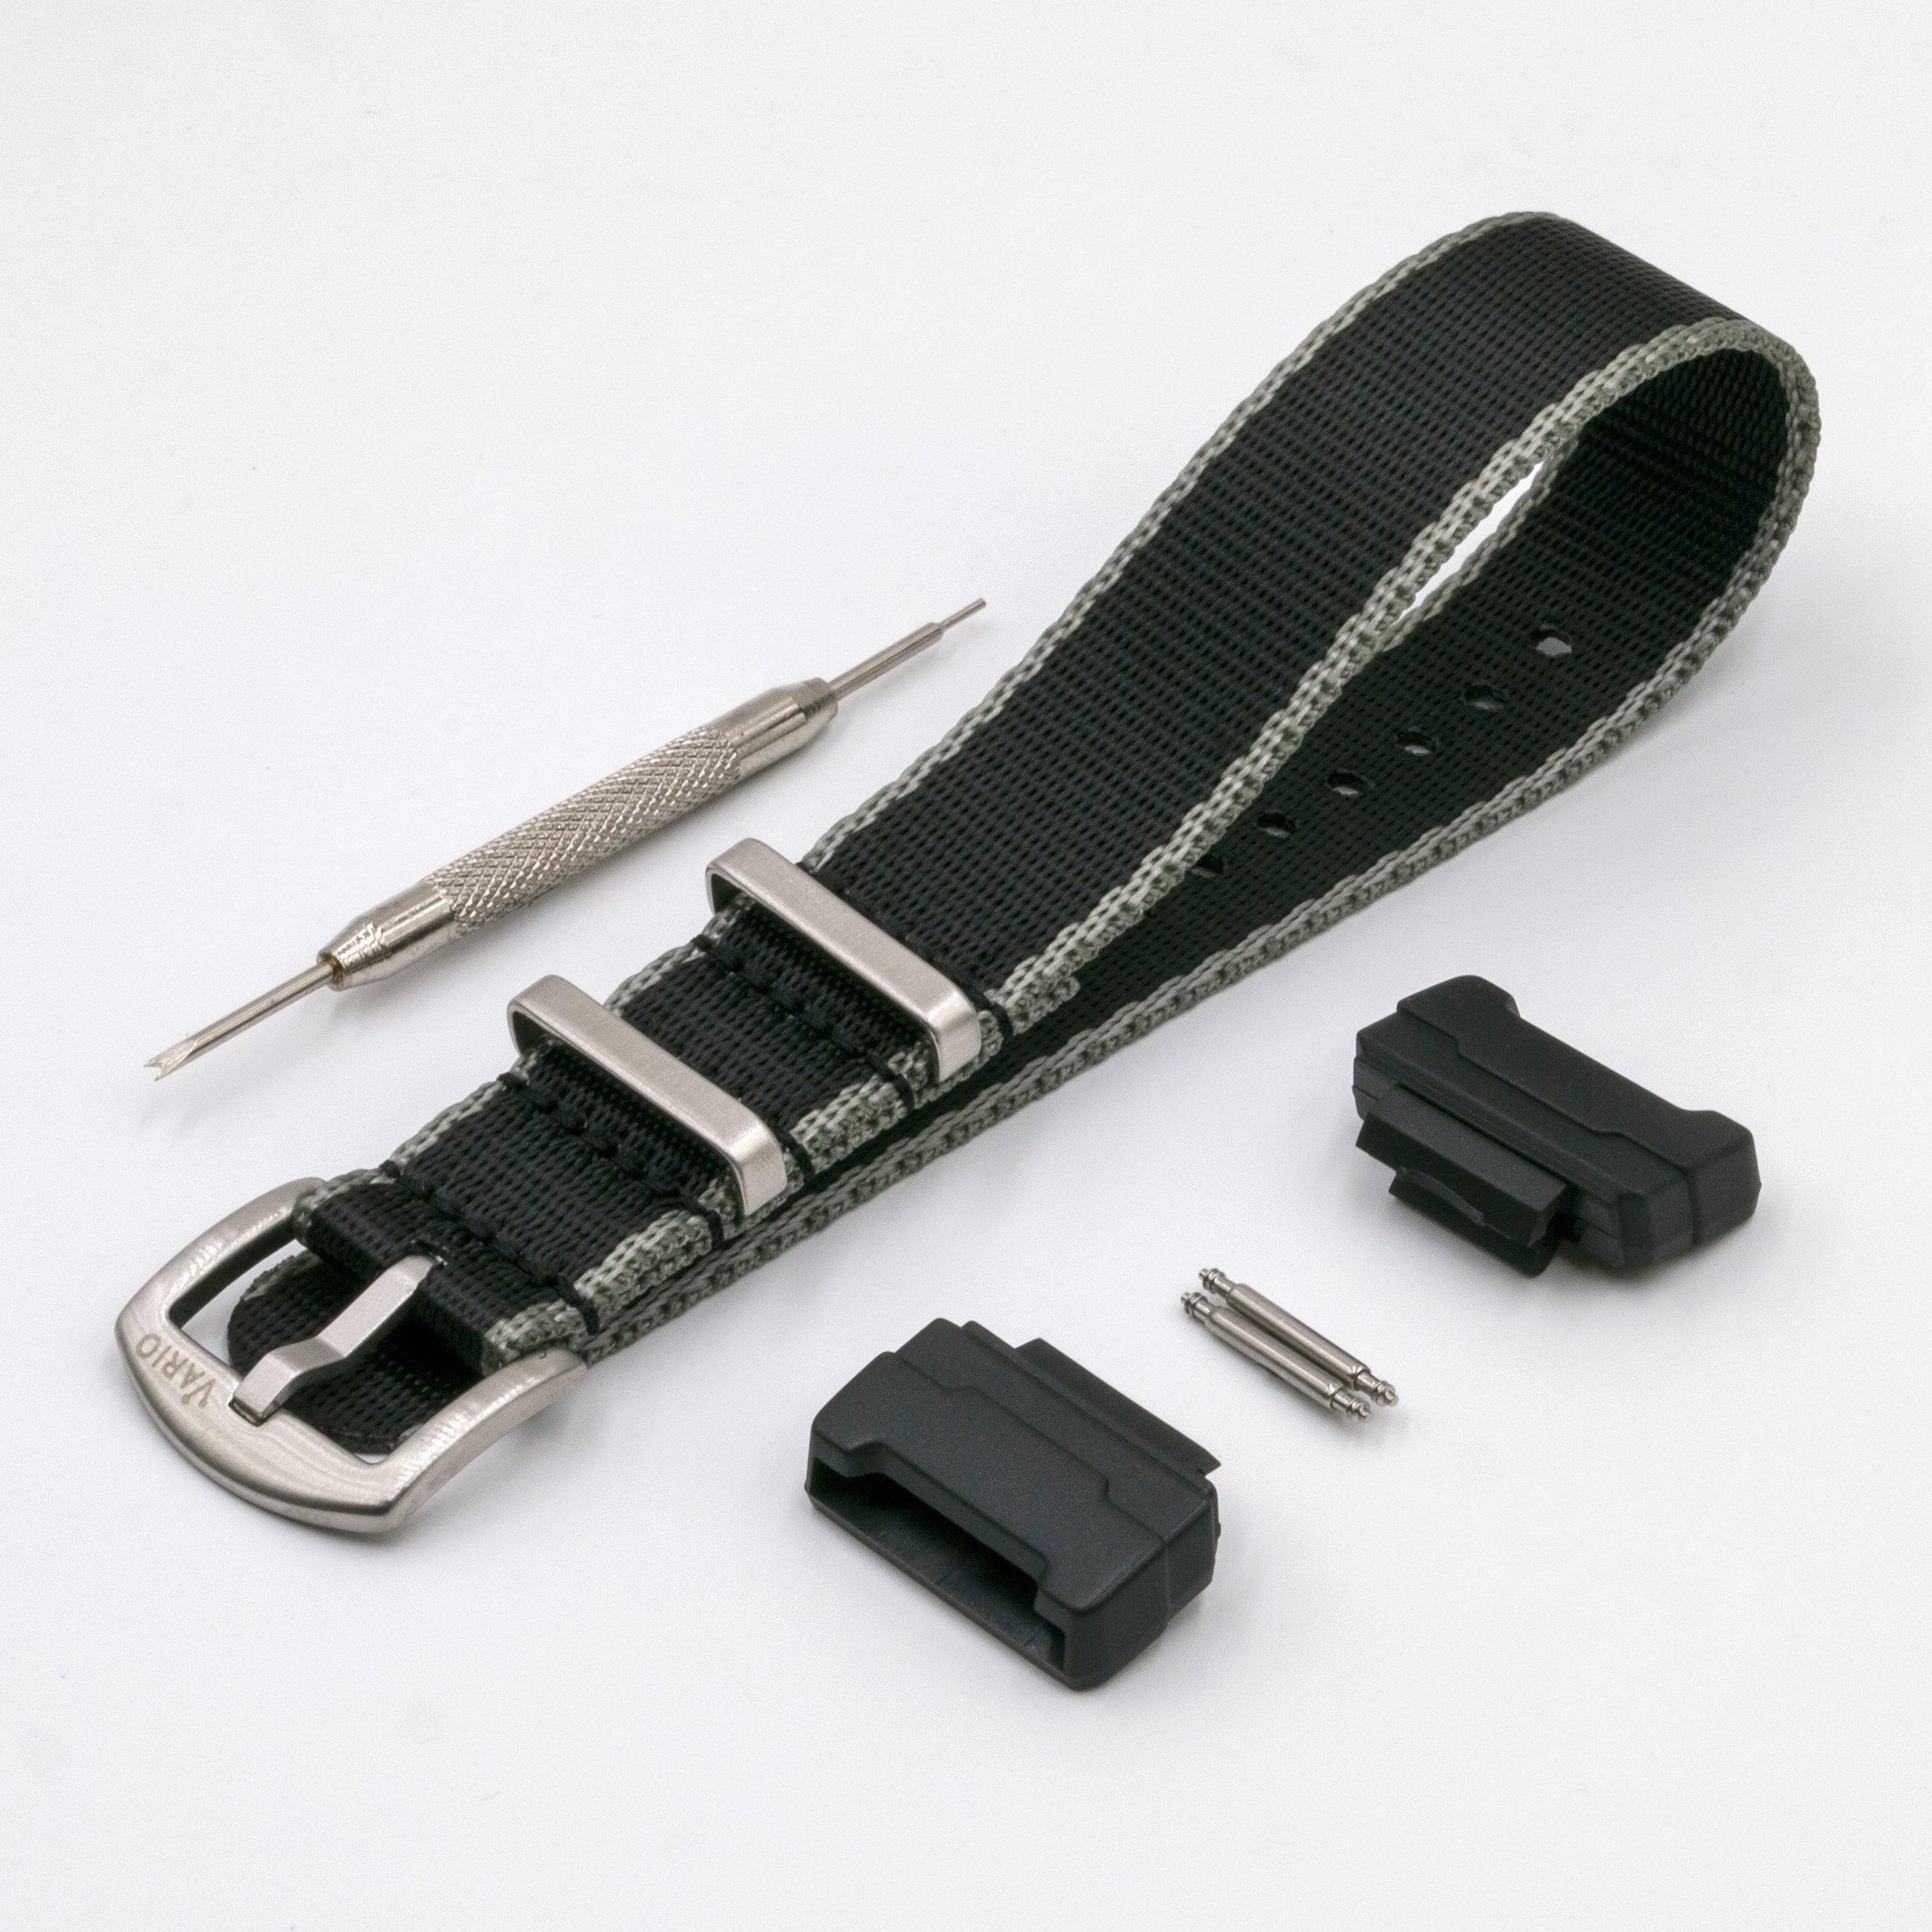 vario gshock seat belt adapter kit black and grey